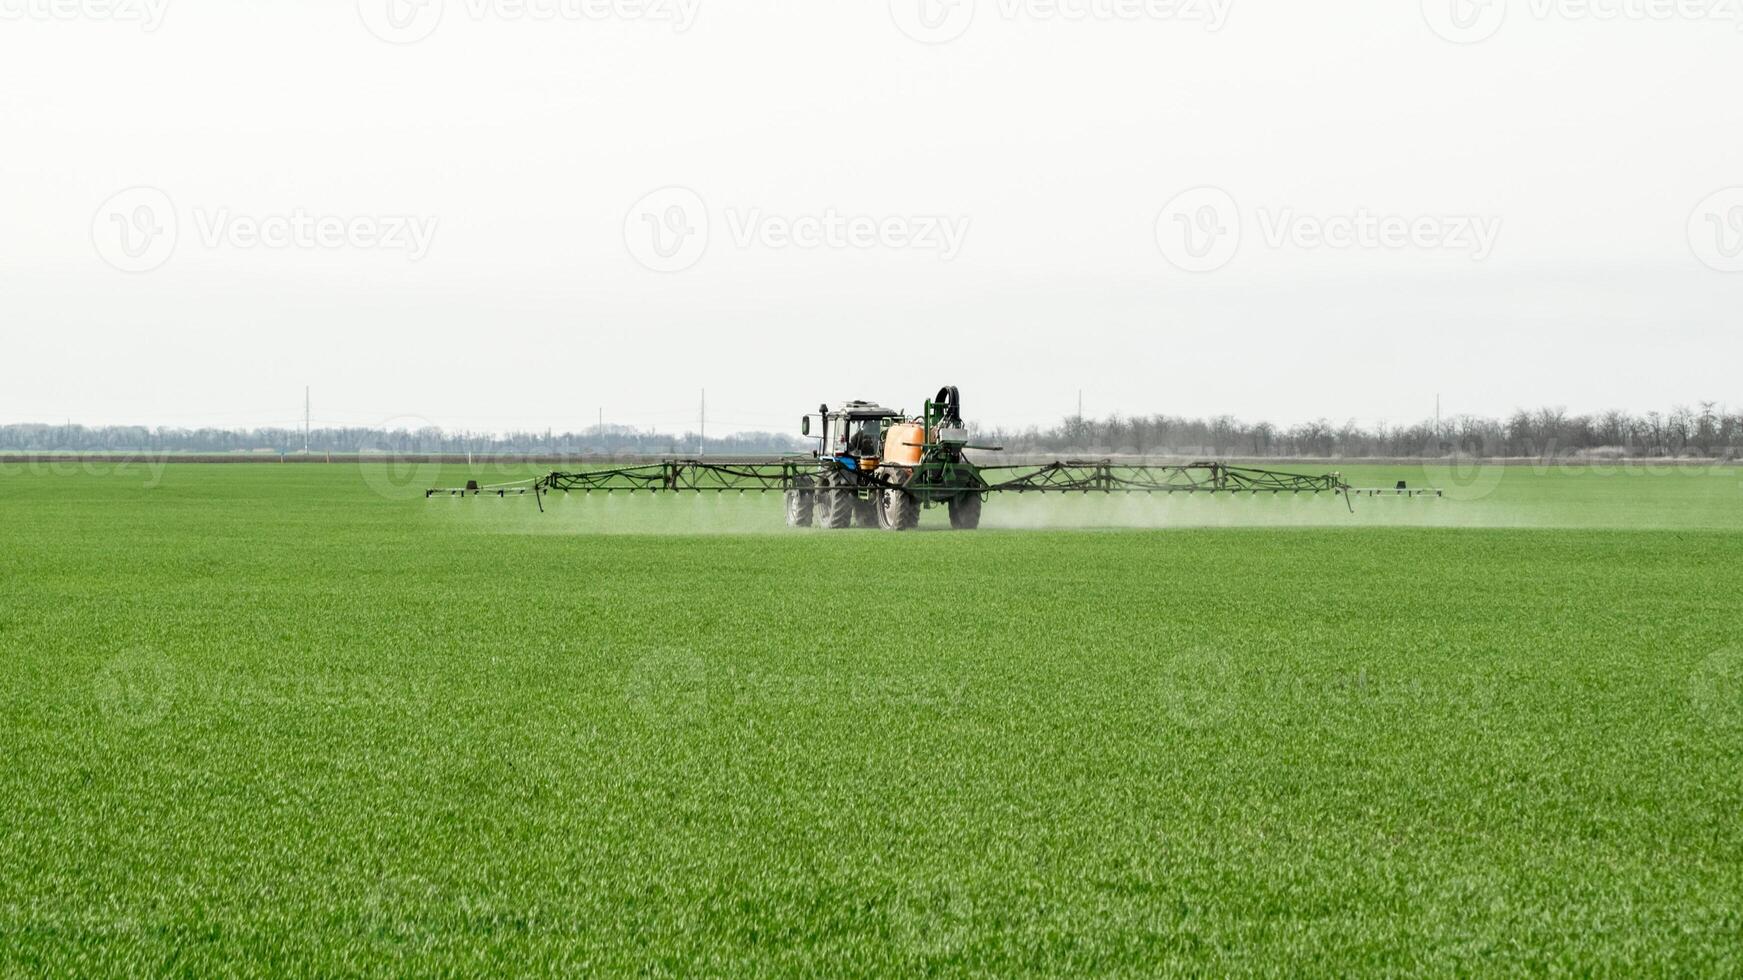 tractor con un rociar dispositivo para finamente disperso fertilizante. foto